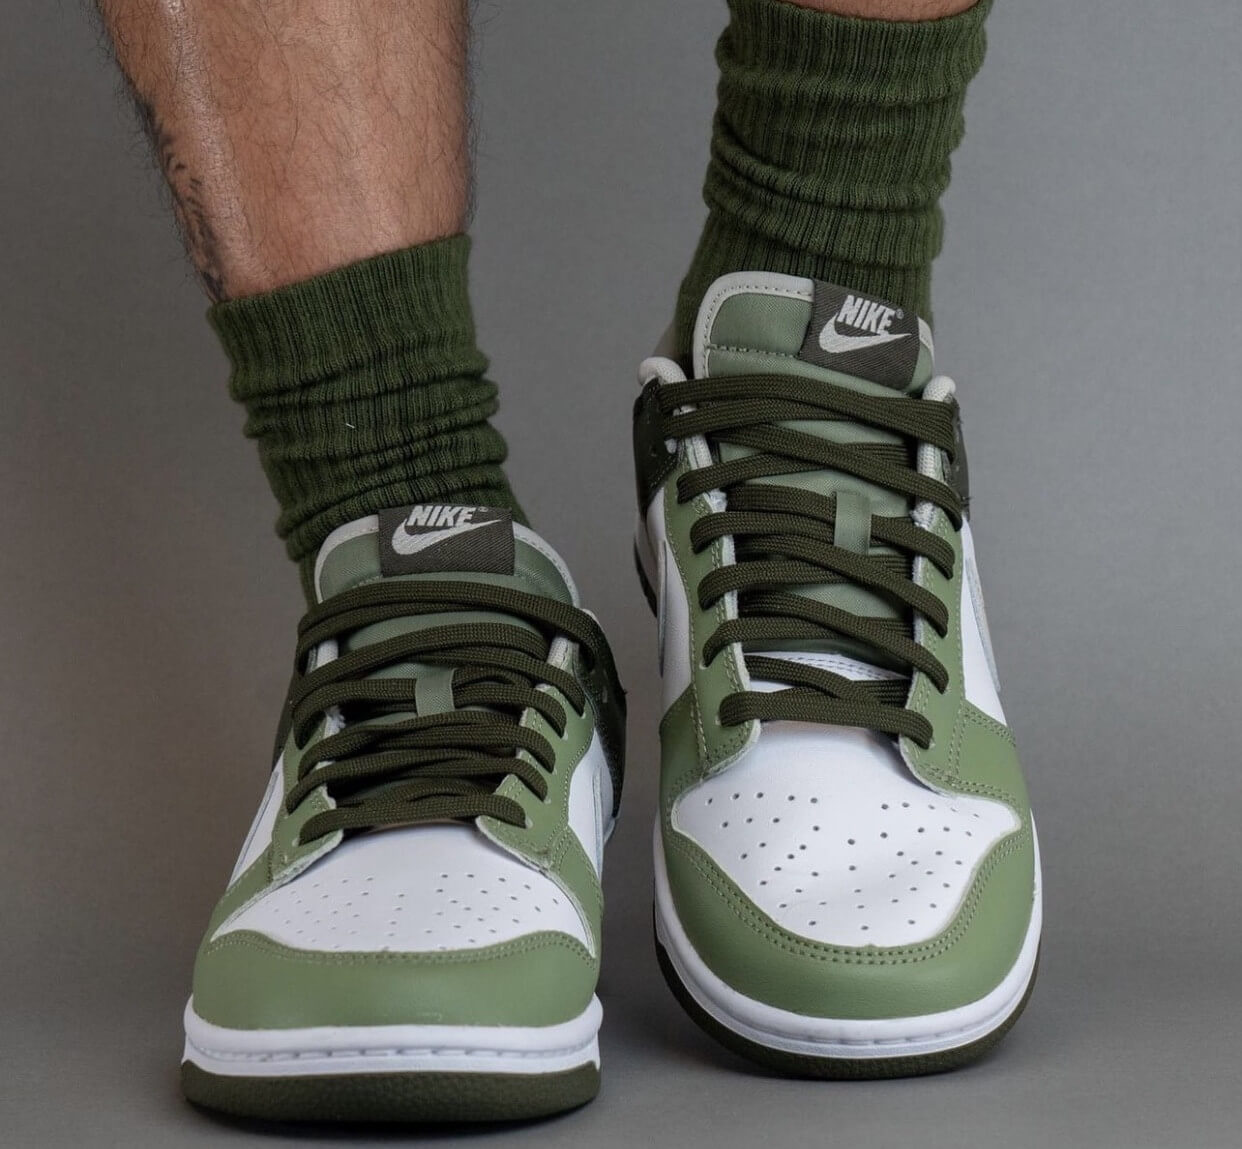 Nike Dunk Low "Oil Green"